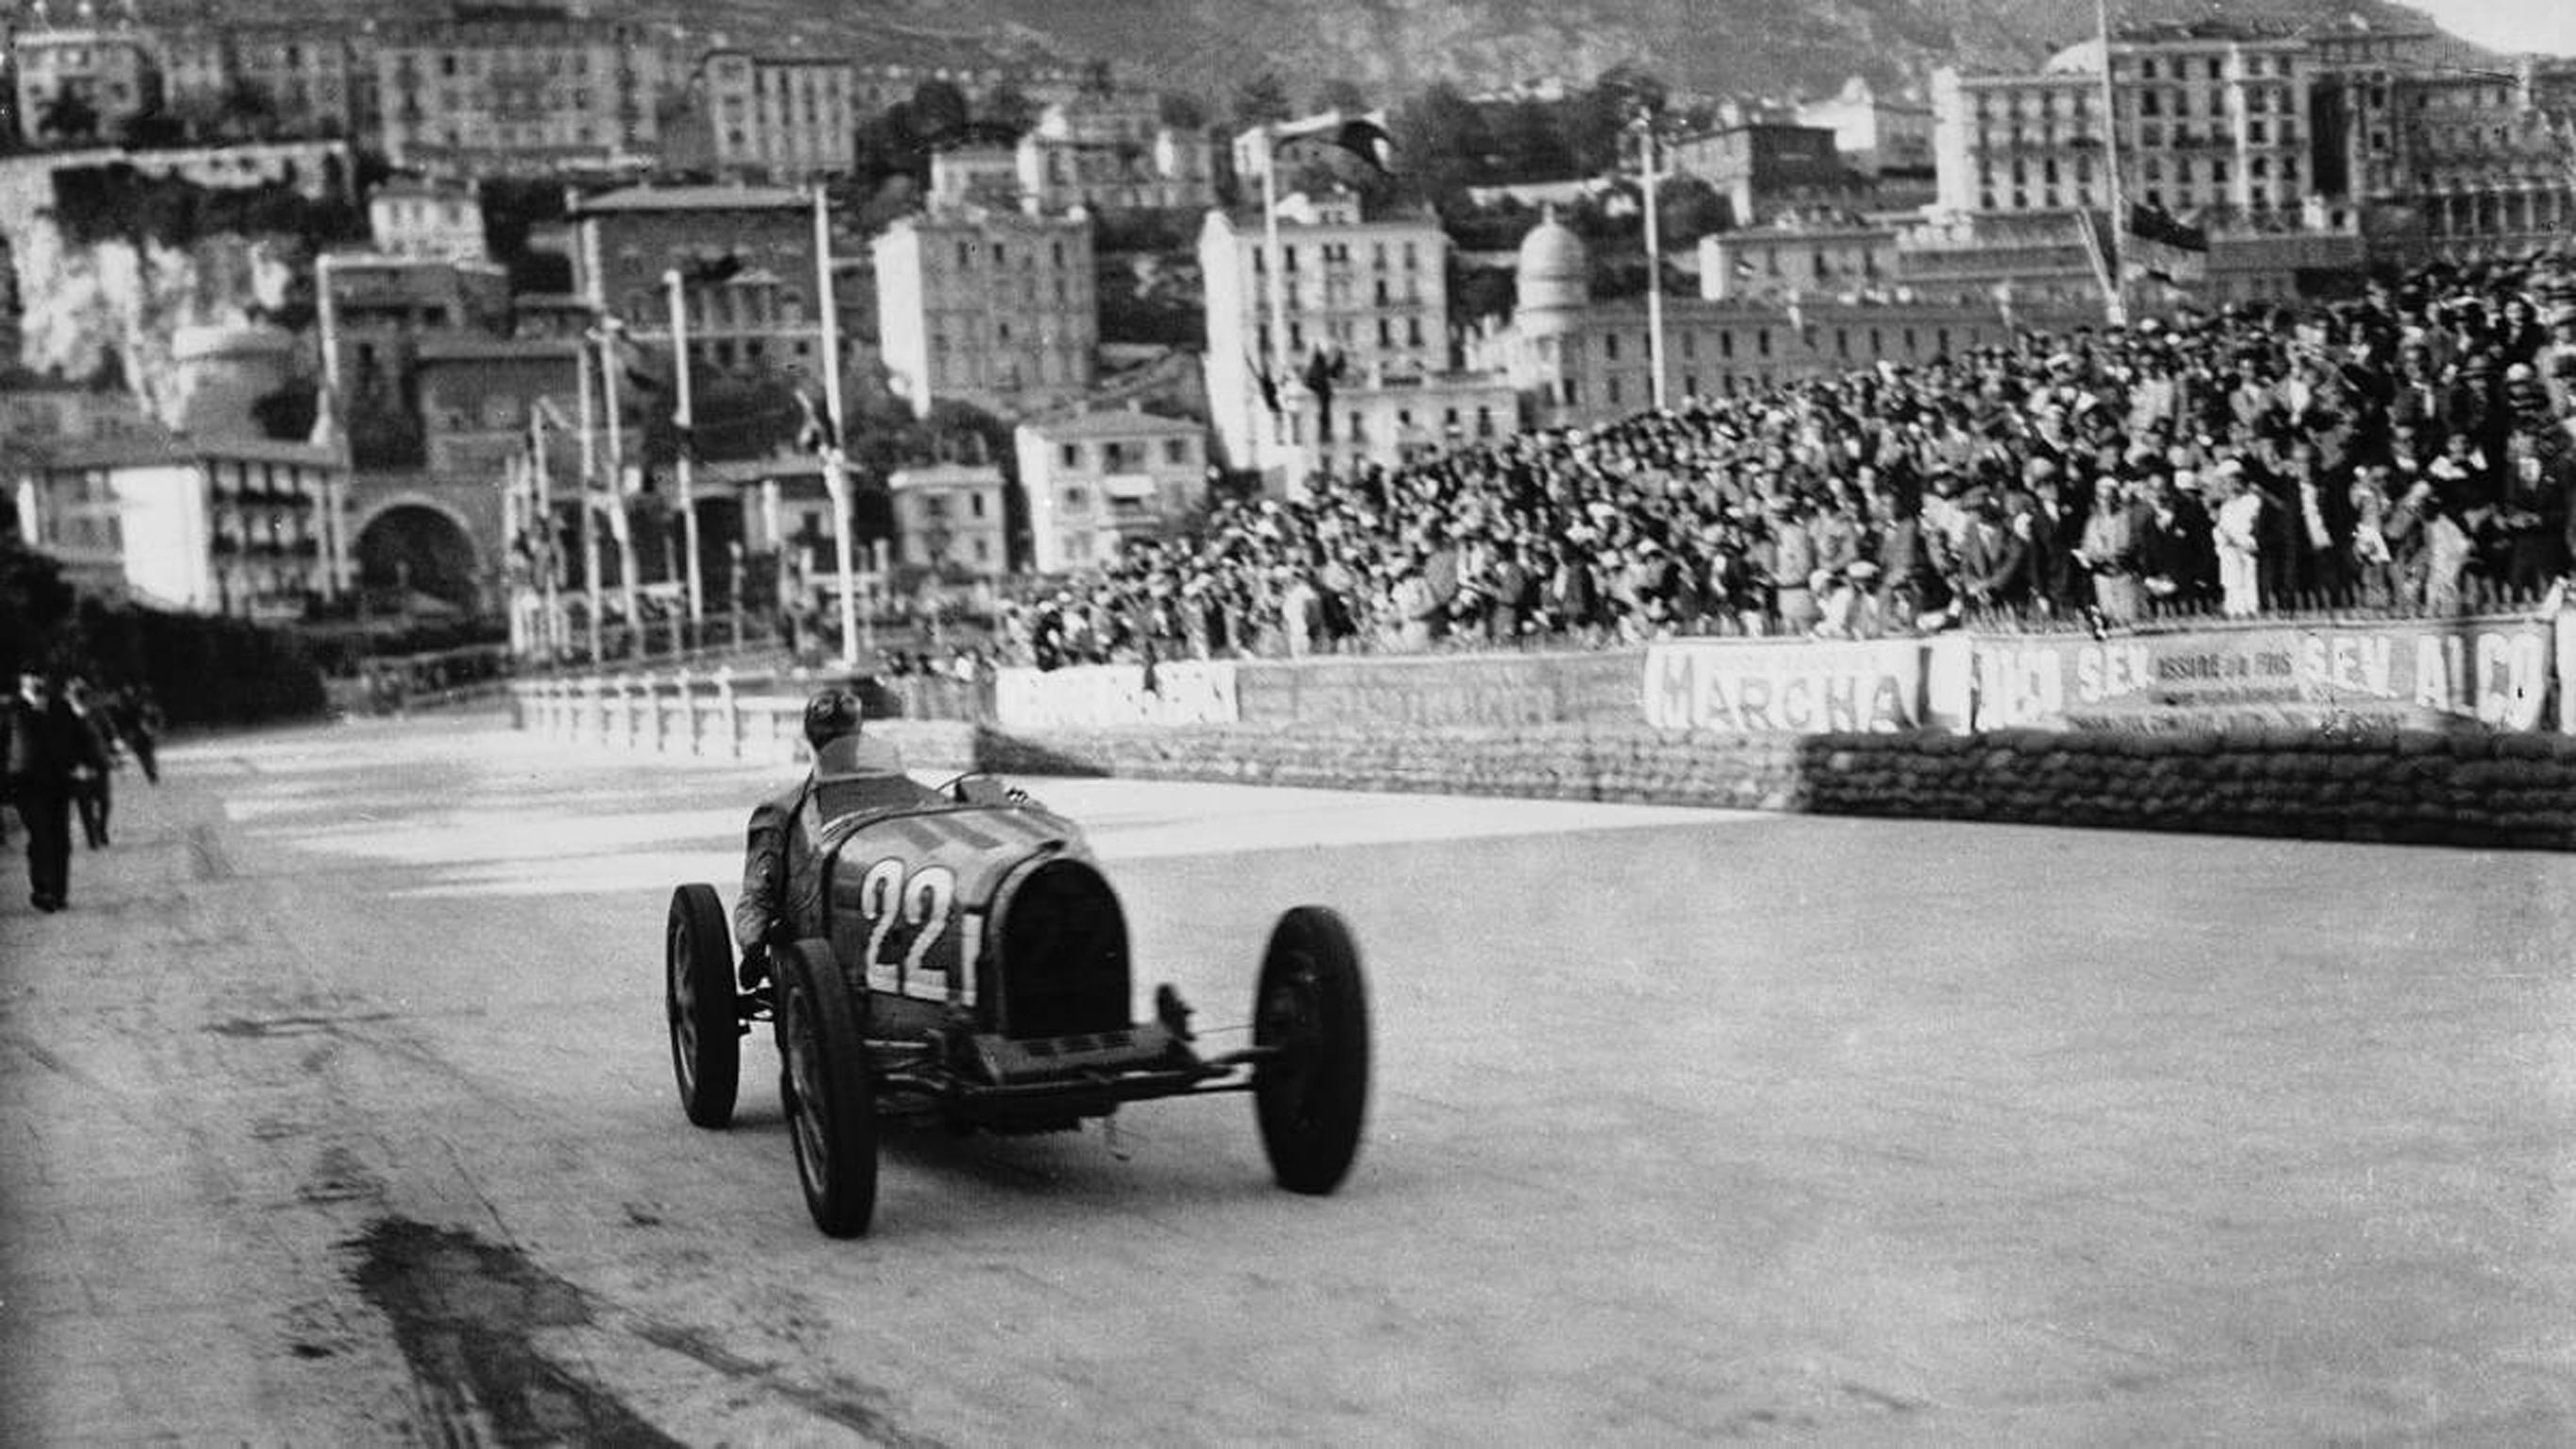 Bugatti Car Race in Monaco 1931, Oil on Canvas Painting by Rene Petit 17